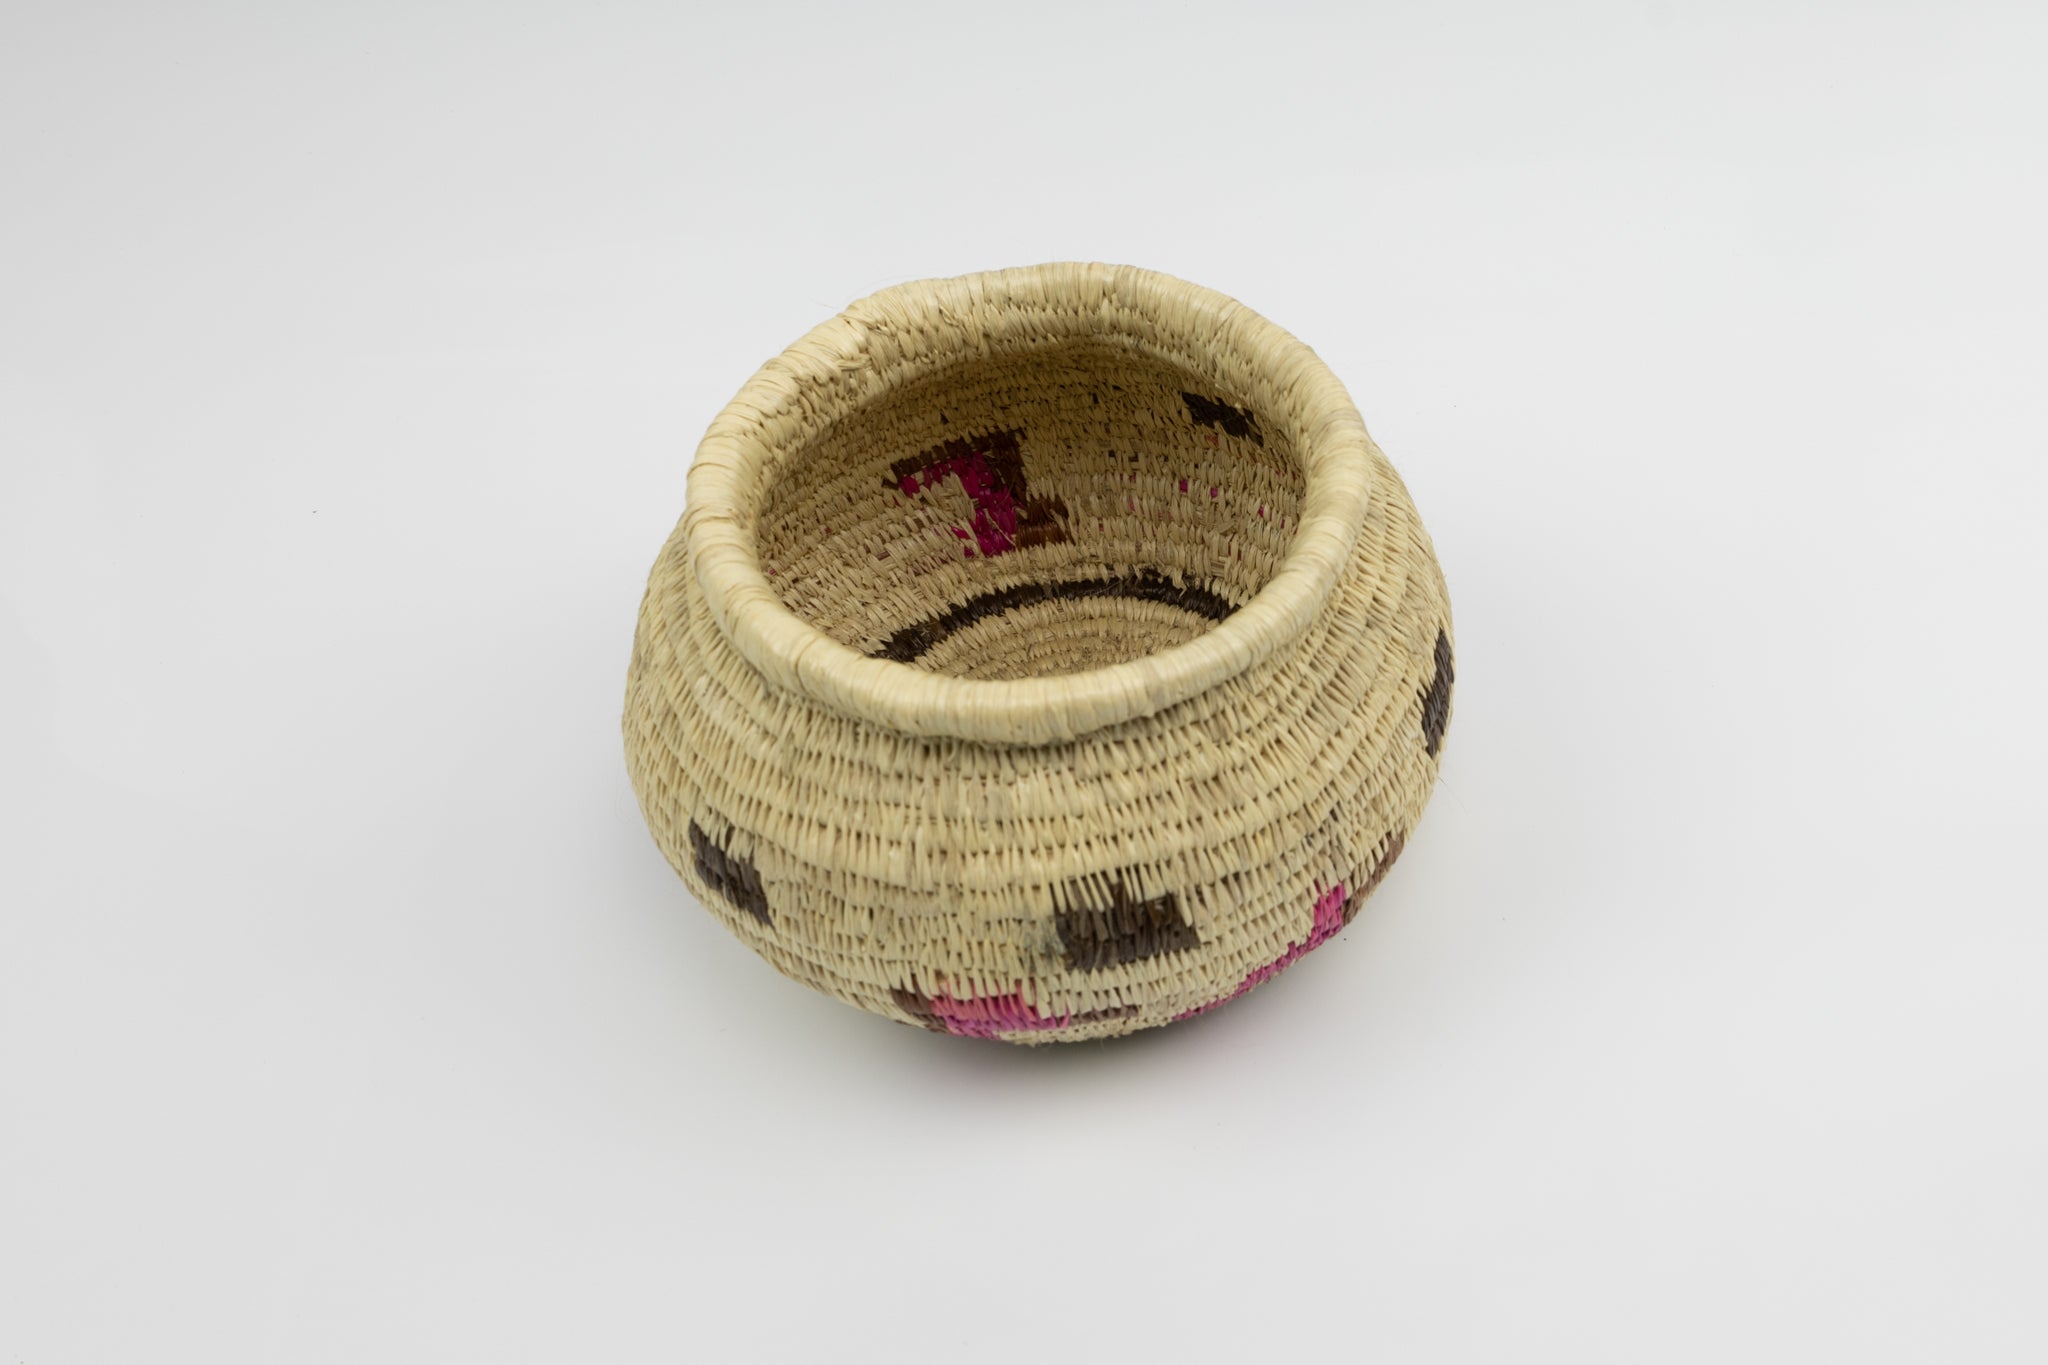 Vintage Handmade Woven Basket Fair Trade